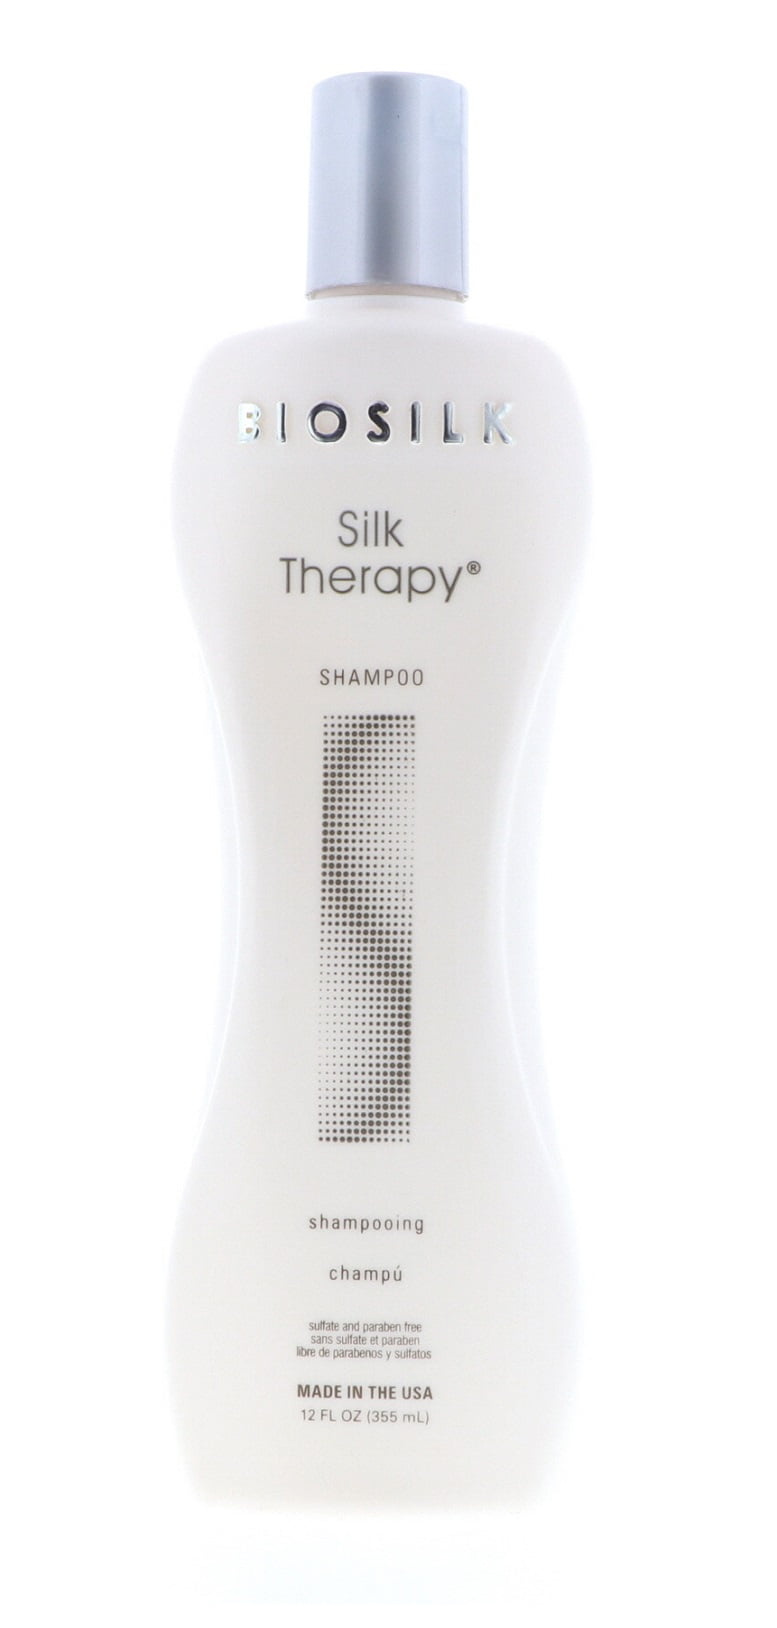 BioSilk Silk Therapy Shampoo, 12 oz - Walmart.com